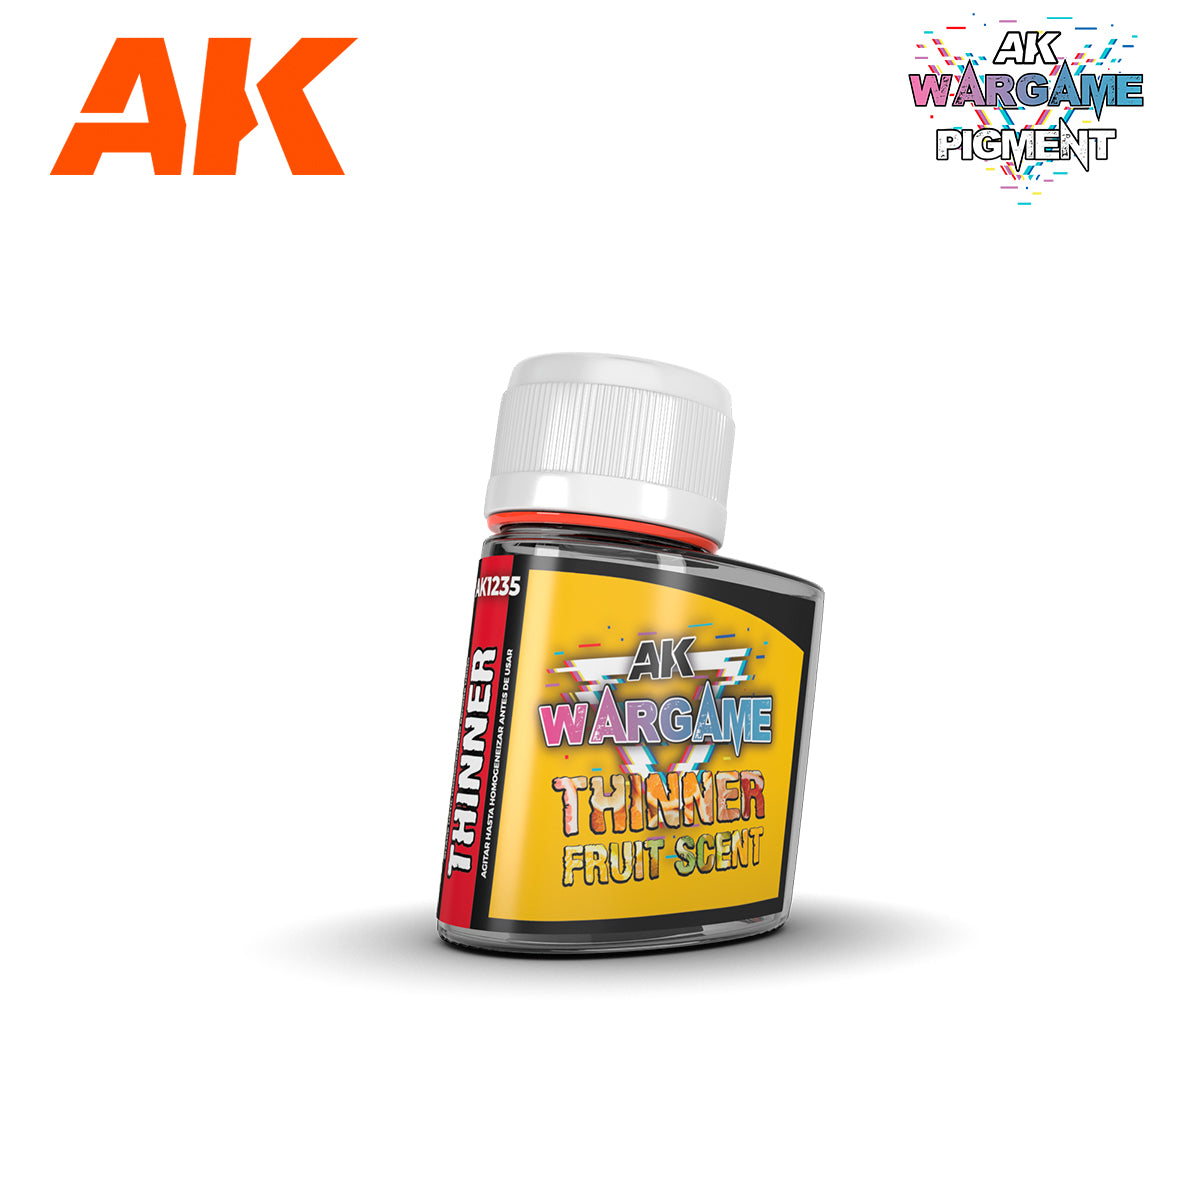 AK1235 - Thinner fruit scent - 125 ml